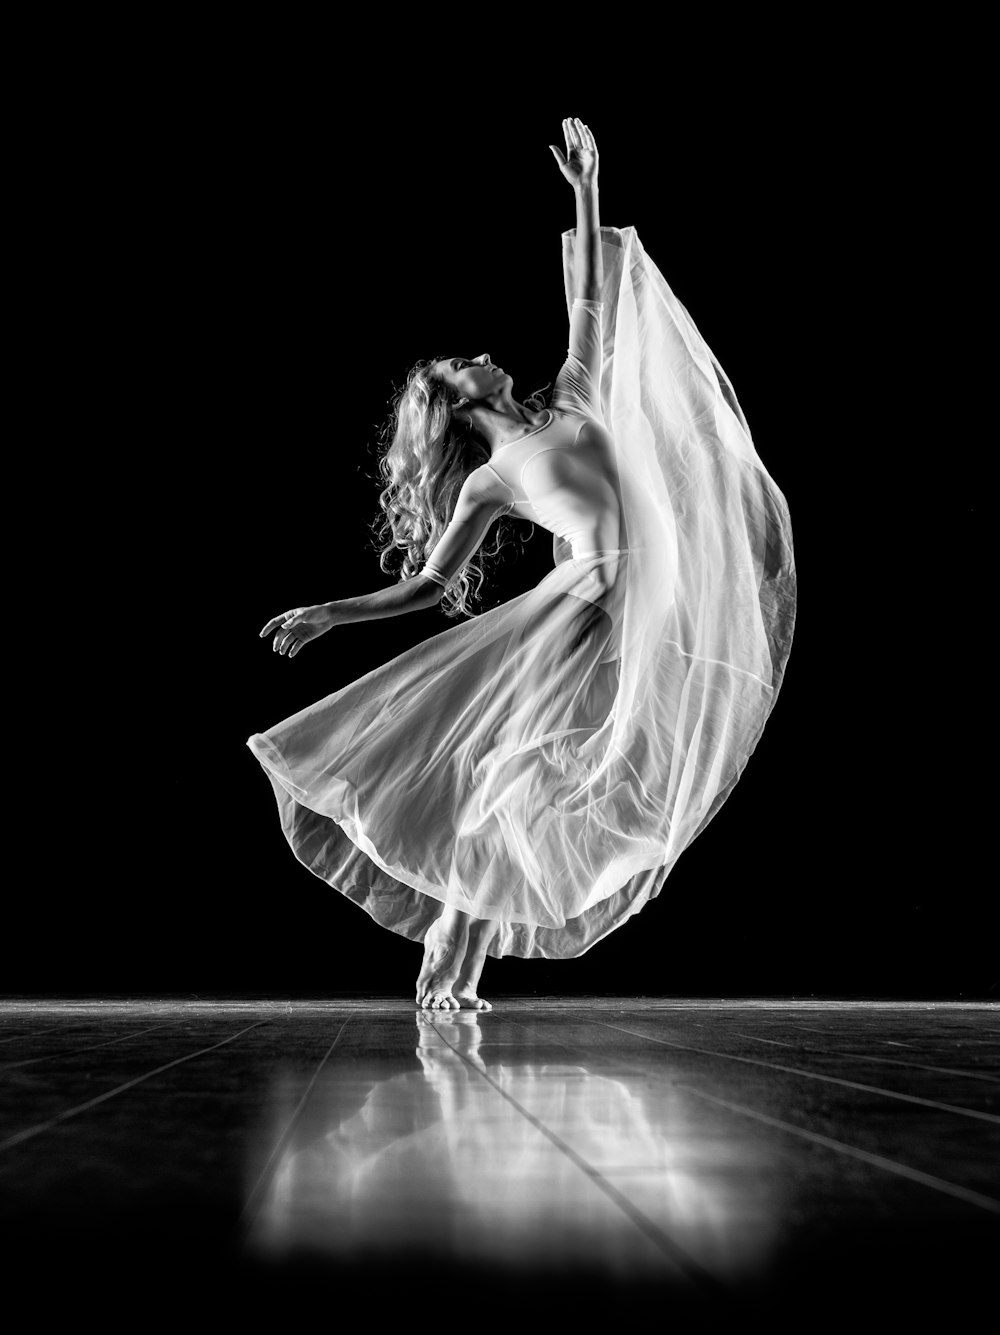 500+ Dancer Pictures [HD] | Download Free Images on Unsplash